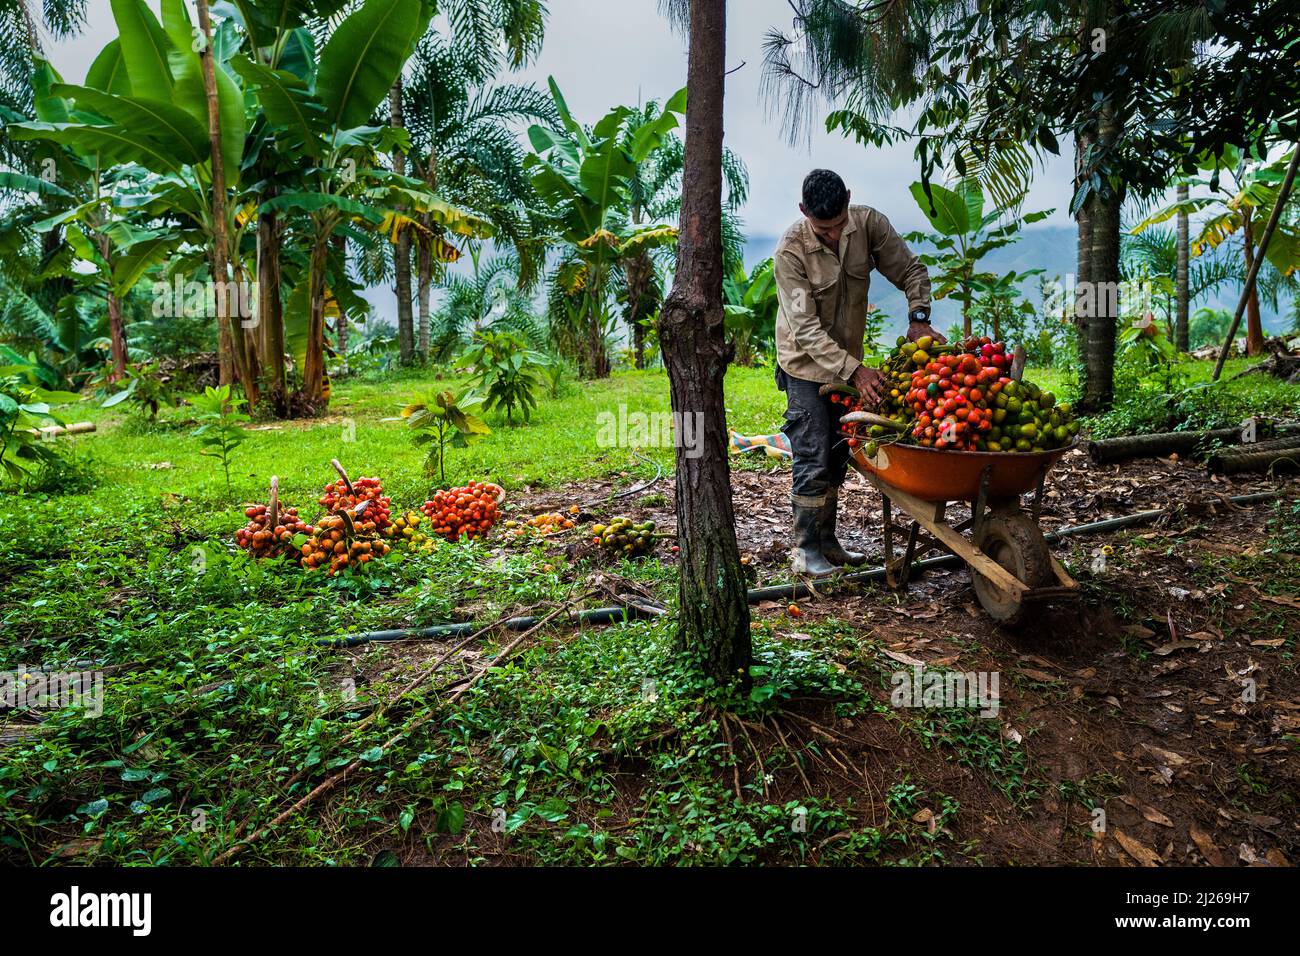 A Colombian farmer loads a wheelbarrow with freshly harvested chontaduro (peach palm) fruits on a farm near El Tambo, Cauca, Colombia. Stock Photo